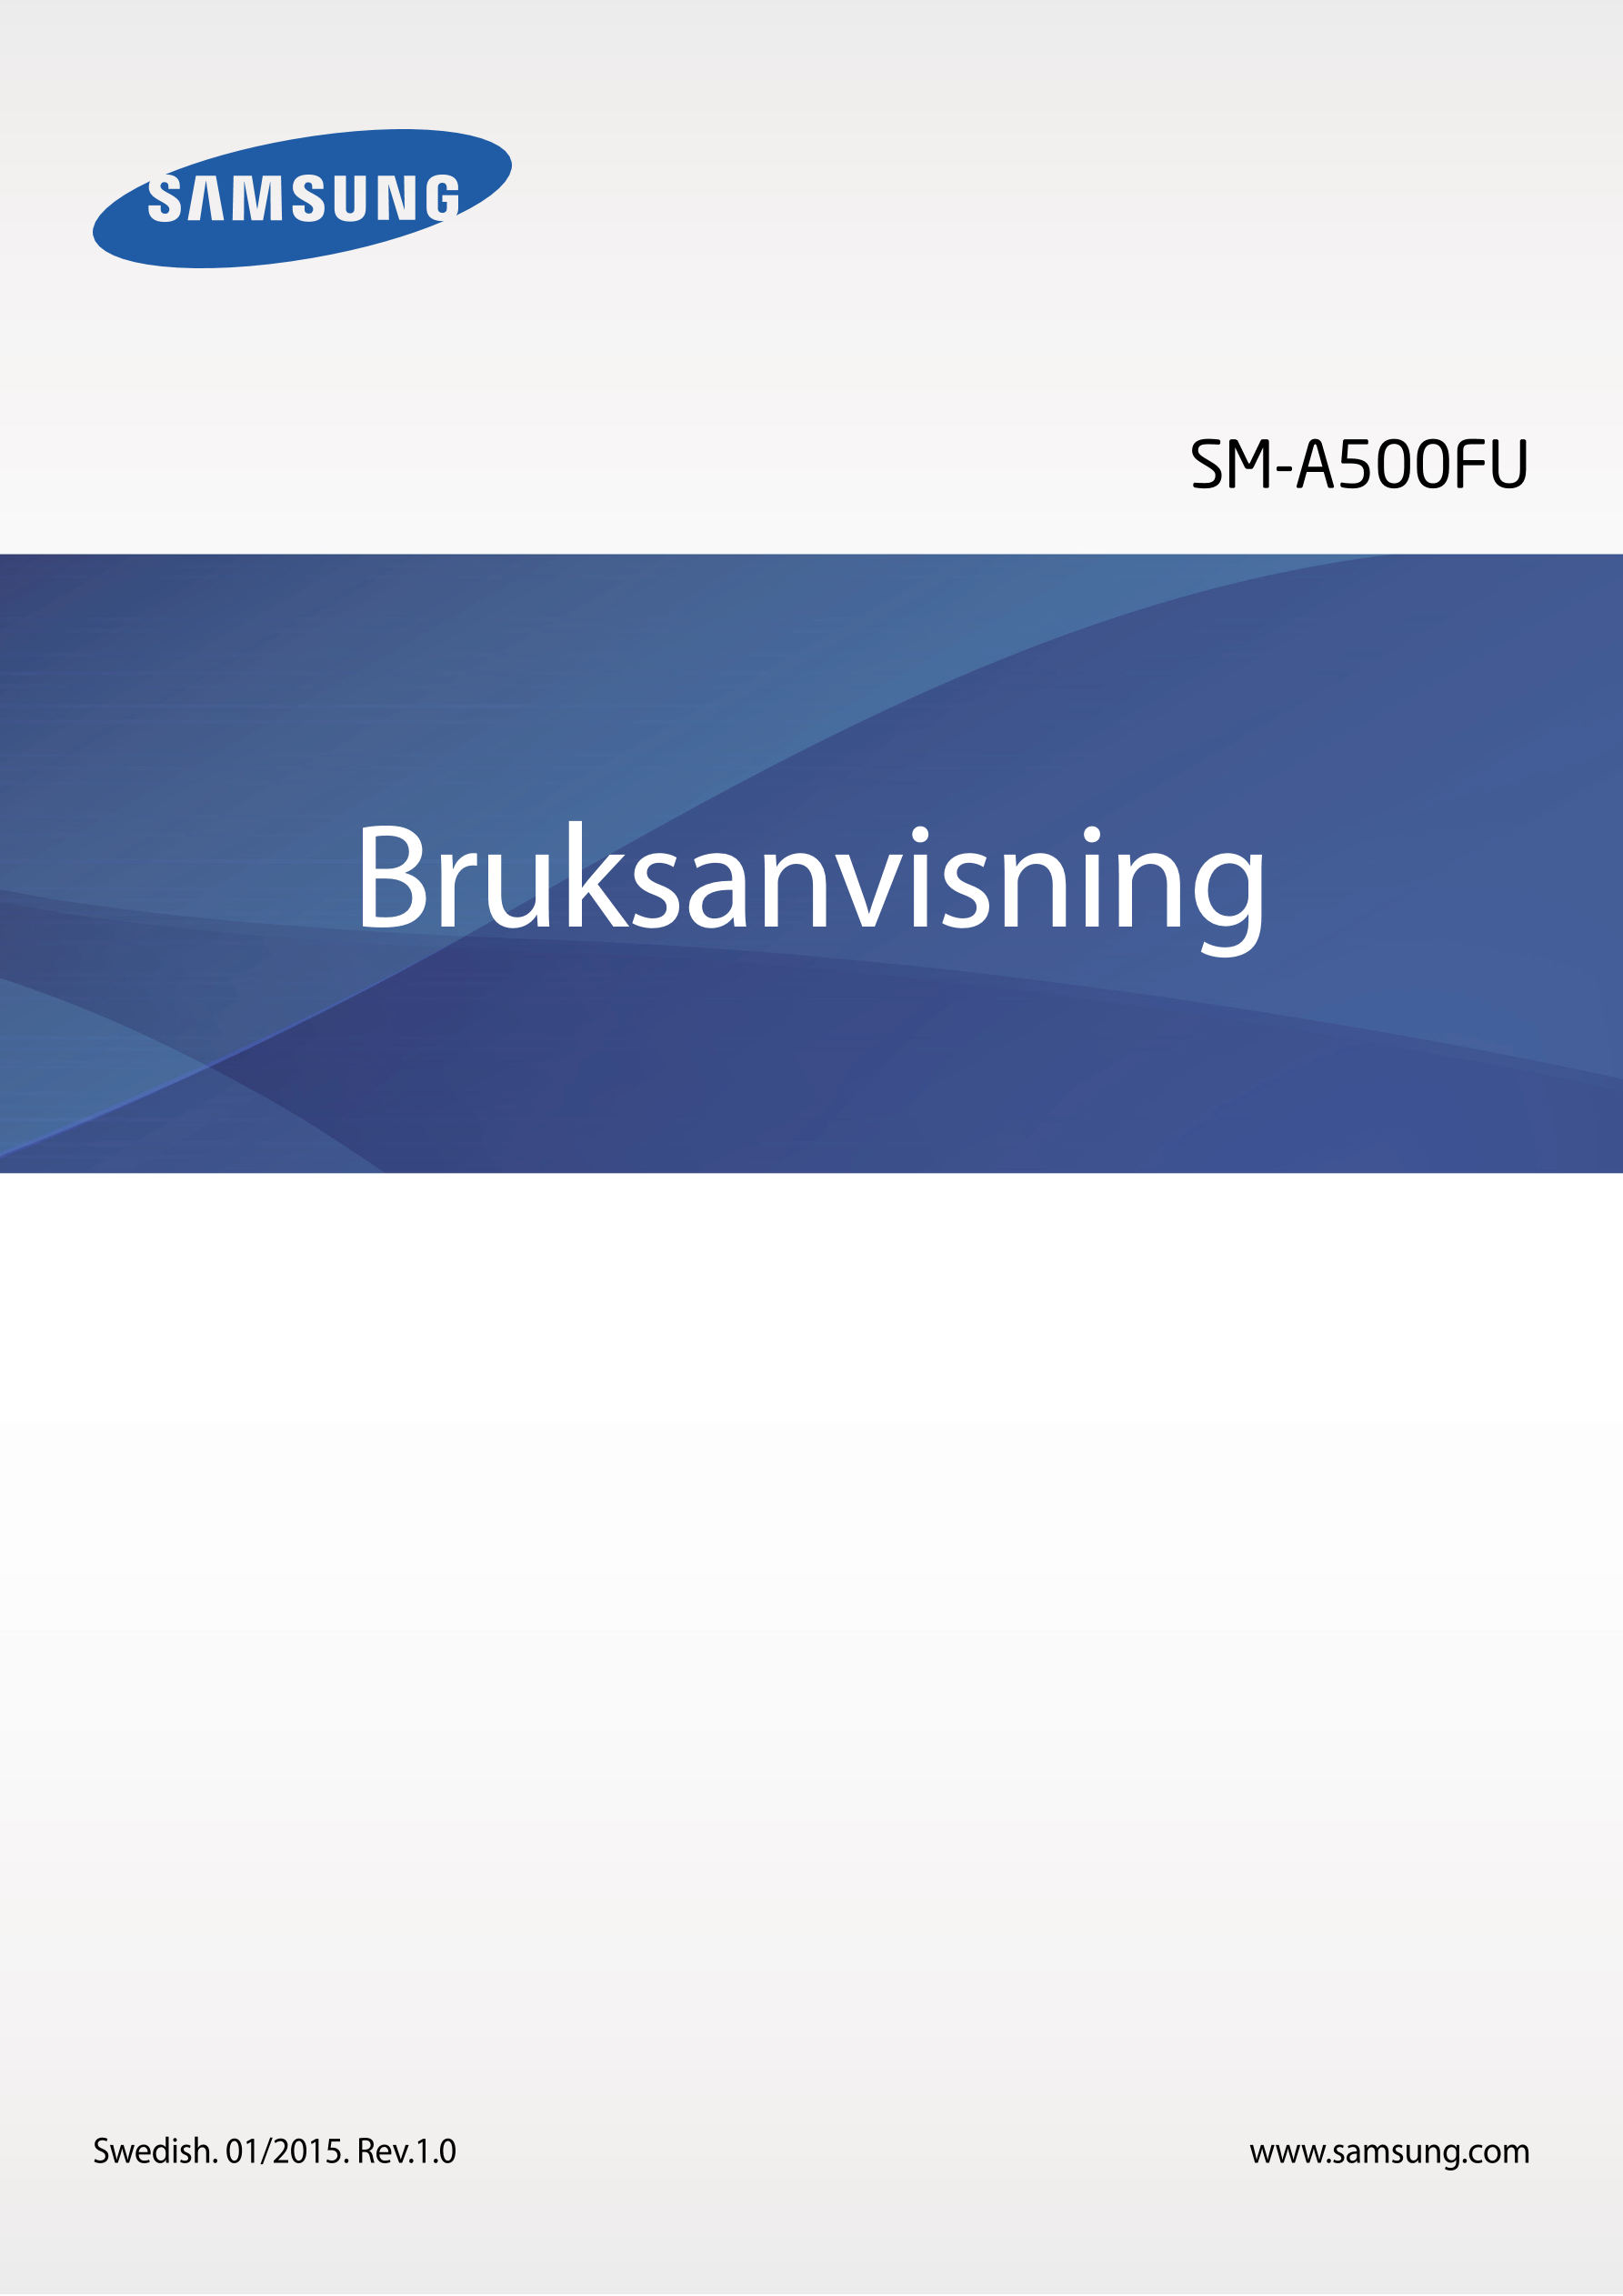 SM-A500FU
Bruksanvisning
Swedish. 01/2015. Rev.1.0 www.samsung.com